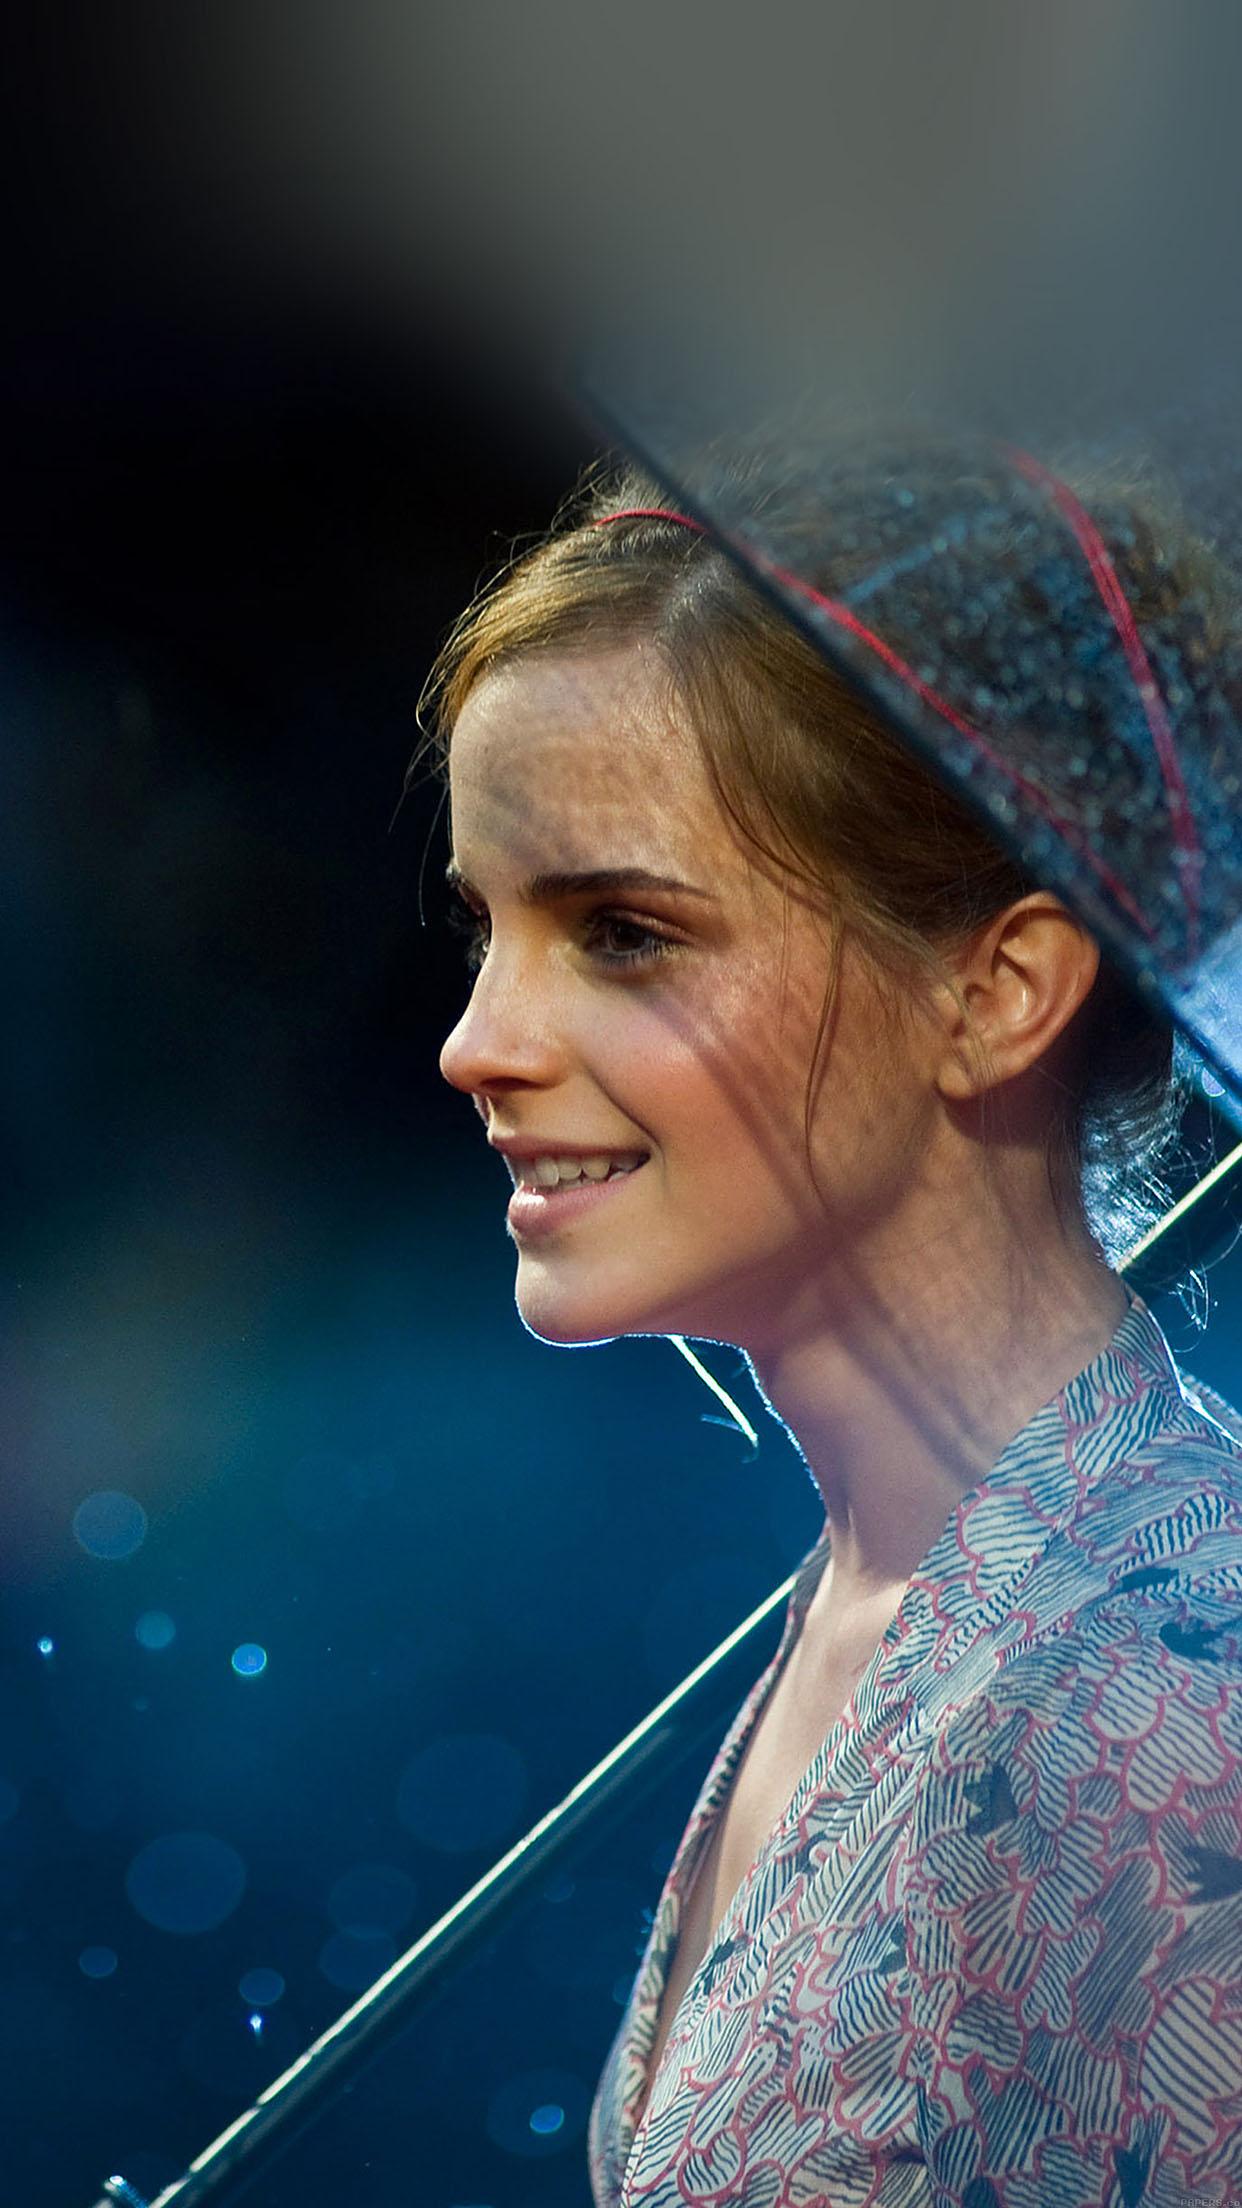 Wallpaper Emma Watson In Rain Girl Film Face Android wallpaper